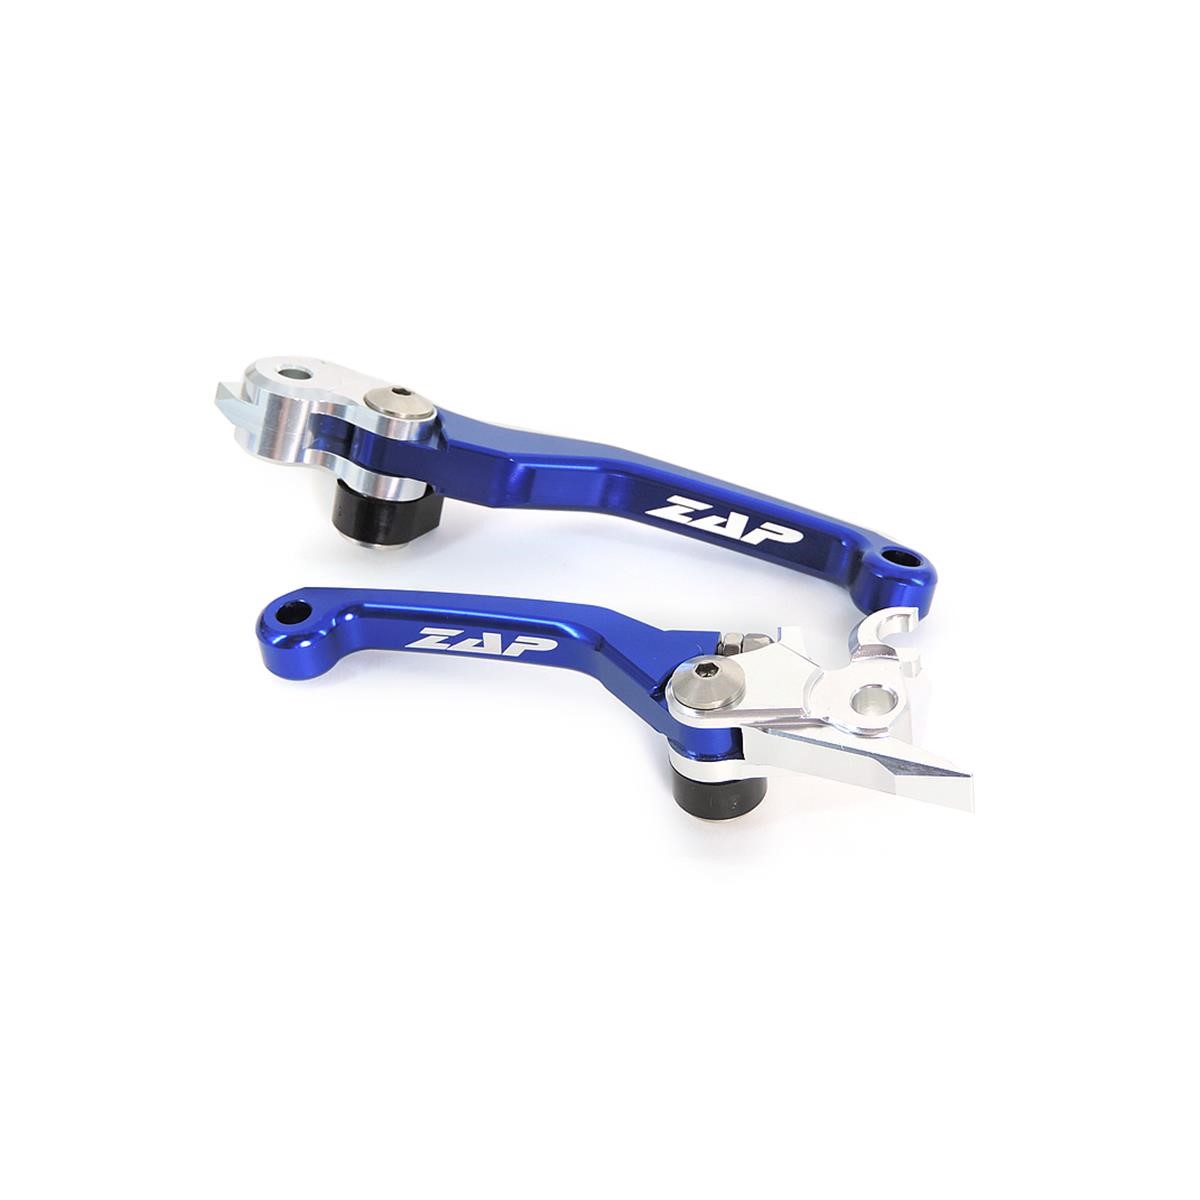 ZAP Brems-/Kupplungshebel-Set  Blau, Brembo/Nissin, Beta RR 250/300/350/400/450/520/525